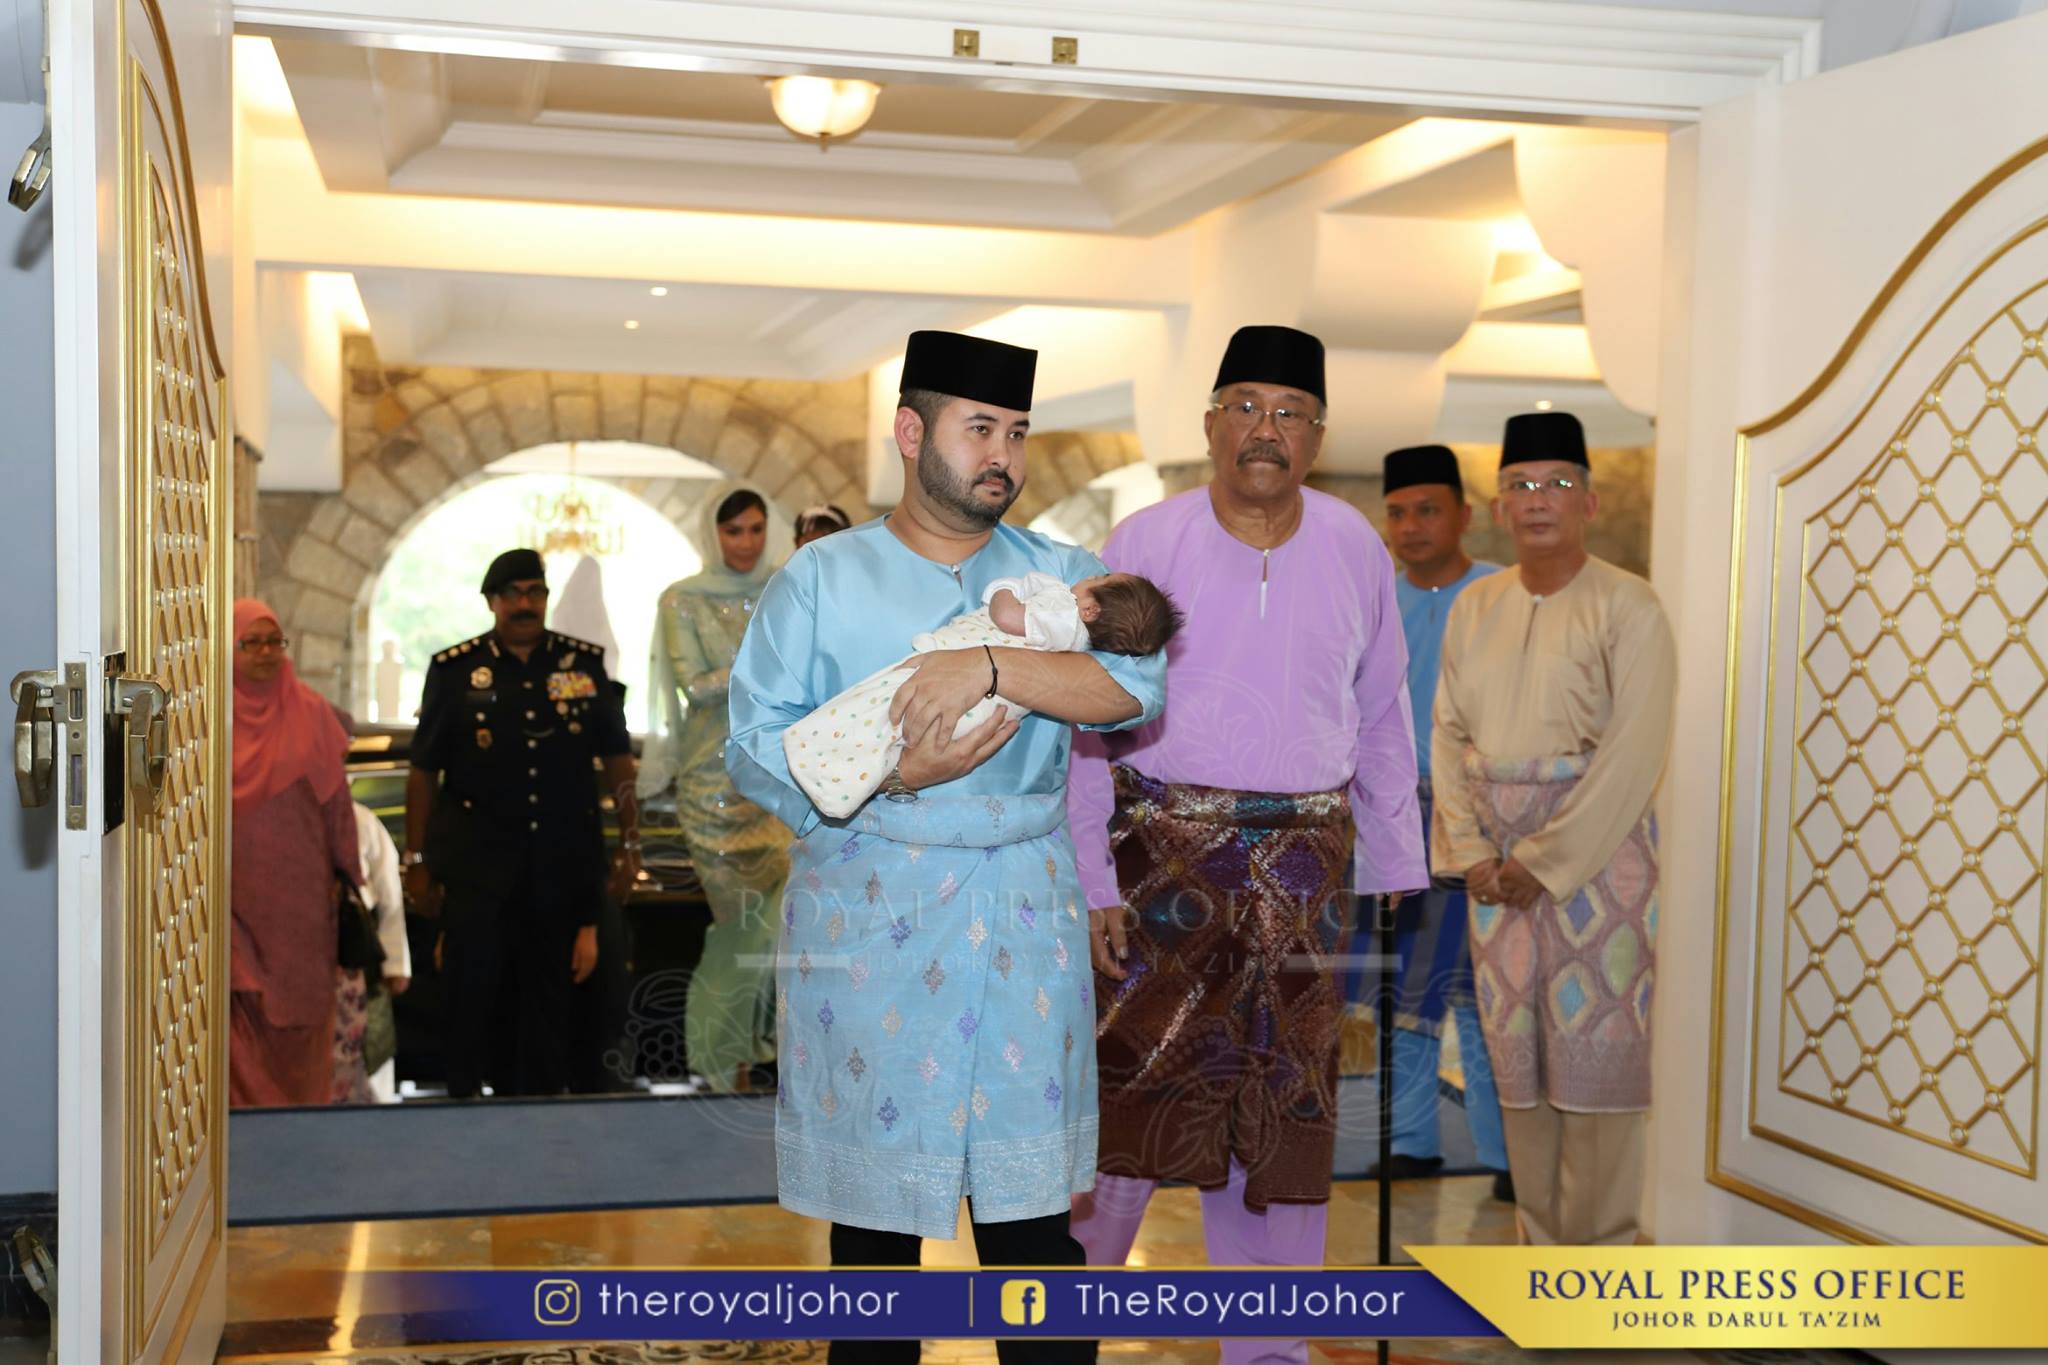 FOTO Majlis Berandam Surai Putera Sulung TMJ Berlangsung ...